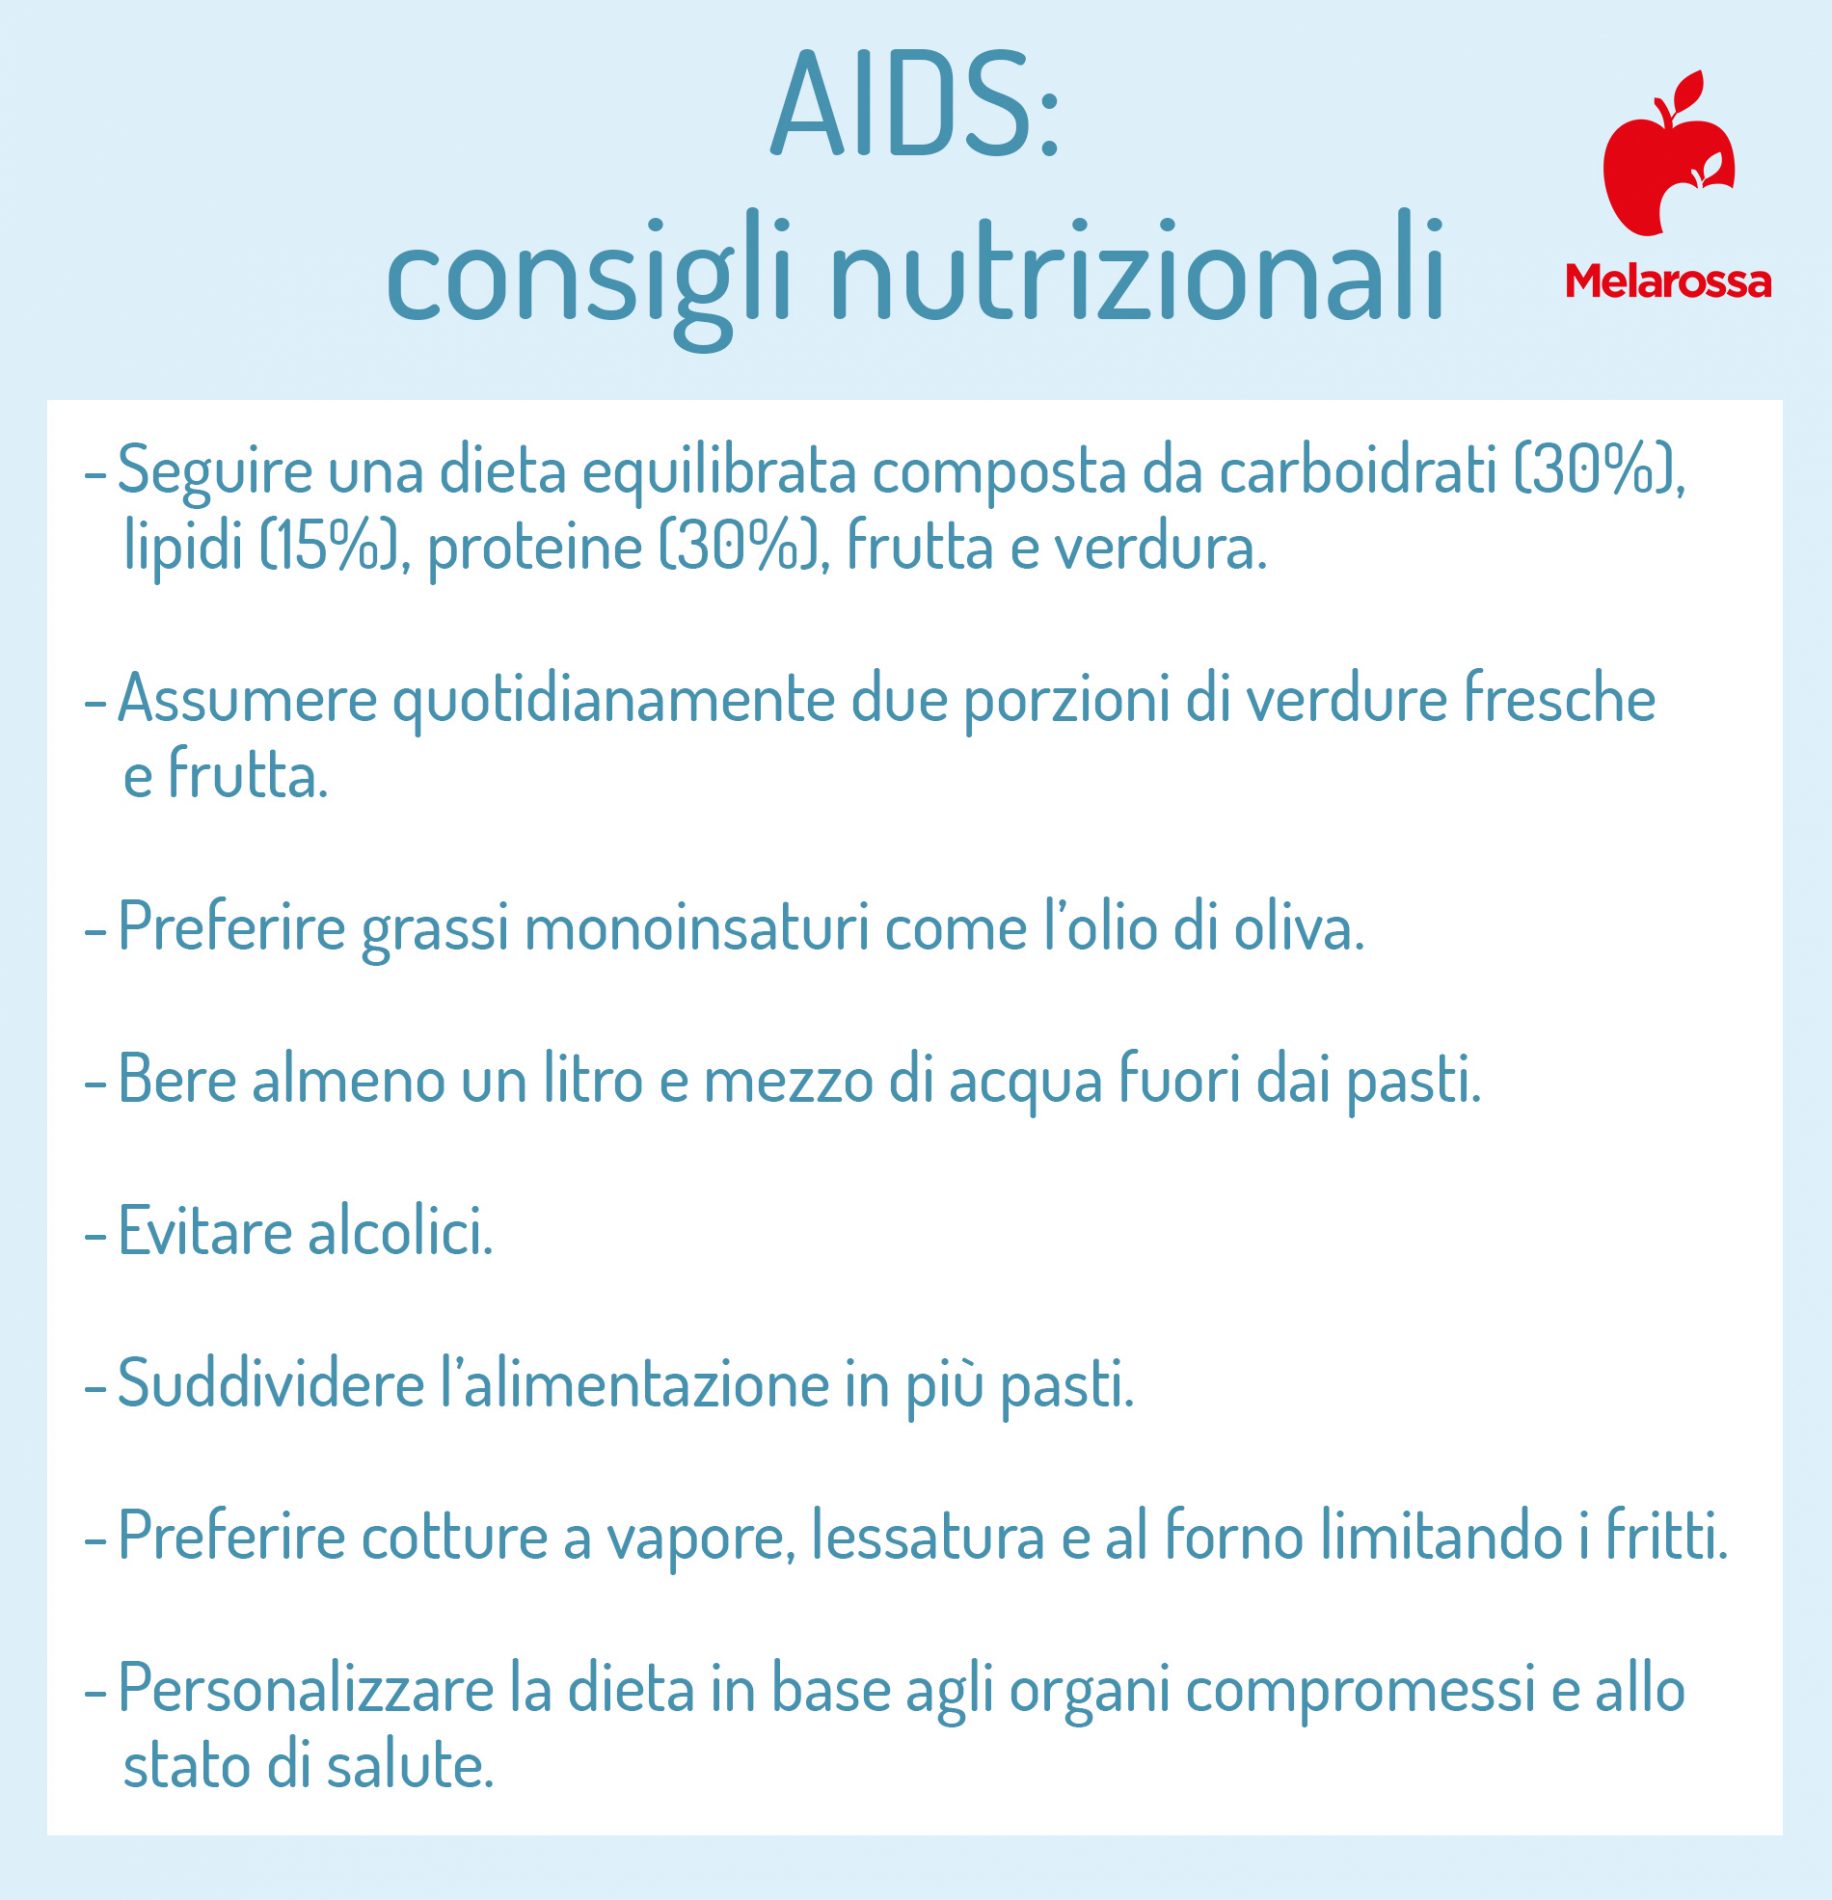 AIDS: consigli nutrizionali 